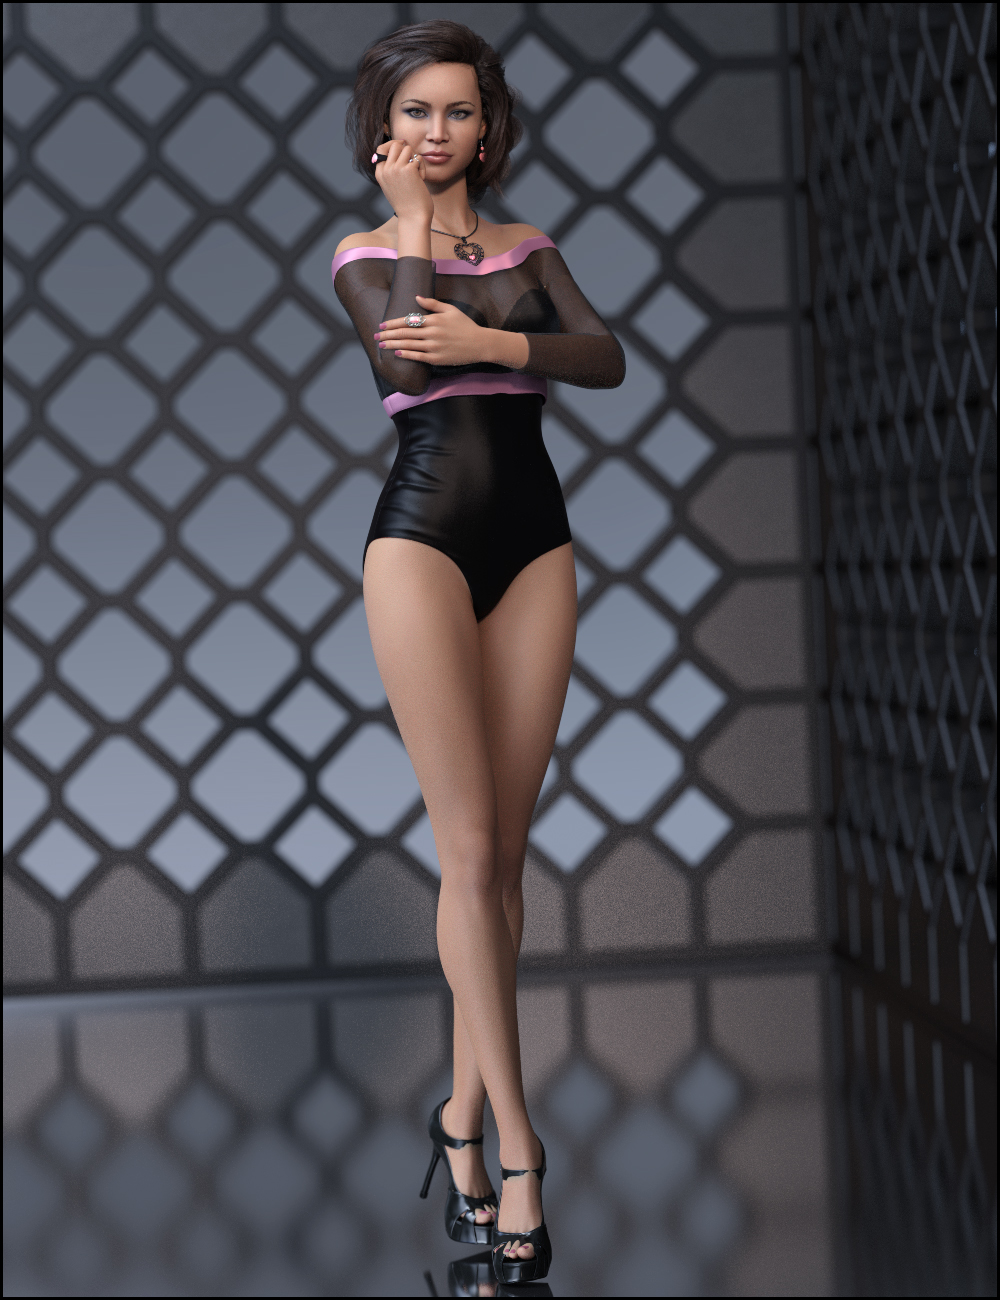 Miranda for Leisa 8 by: DemonicaEviliusJessaii, 3D Models by Daz 3D